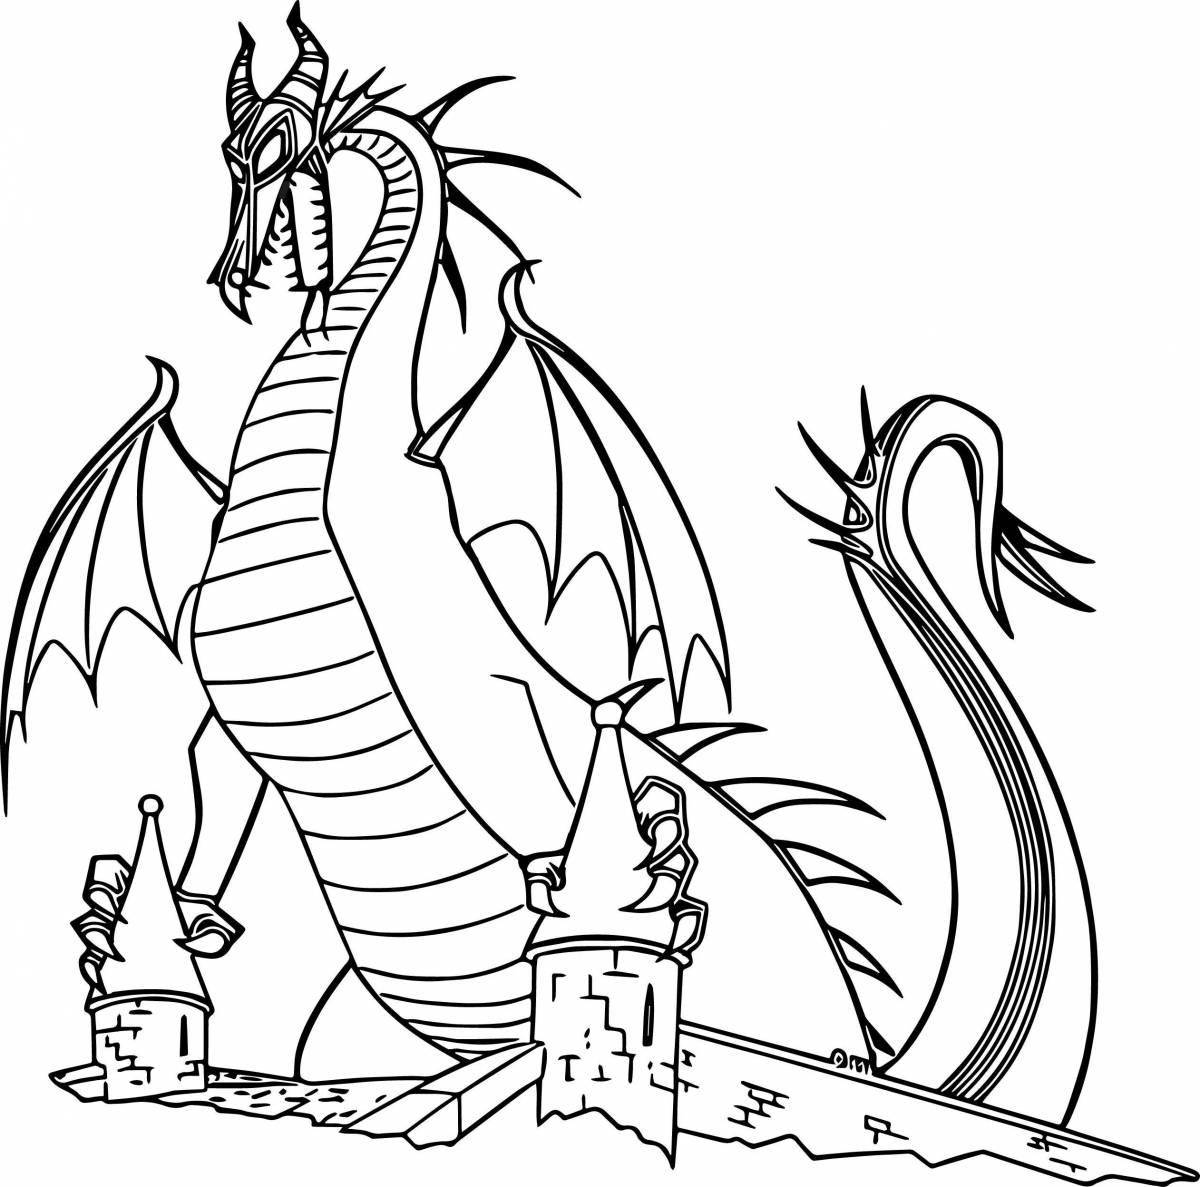 Fantastic dragon coloring book for kids